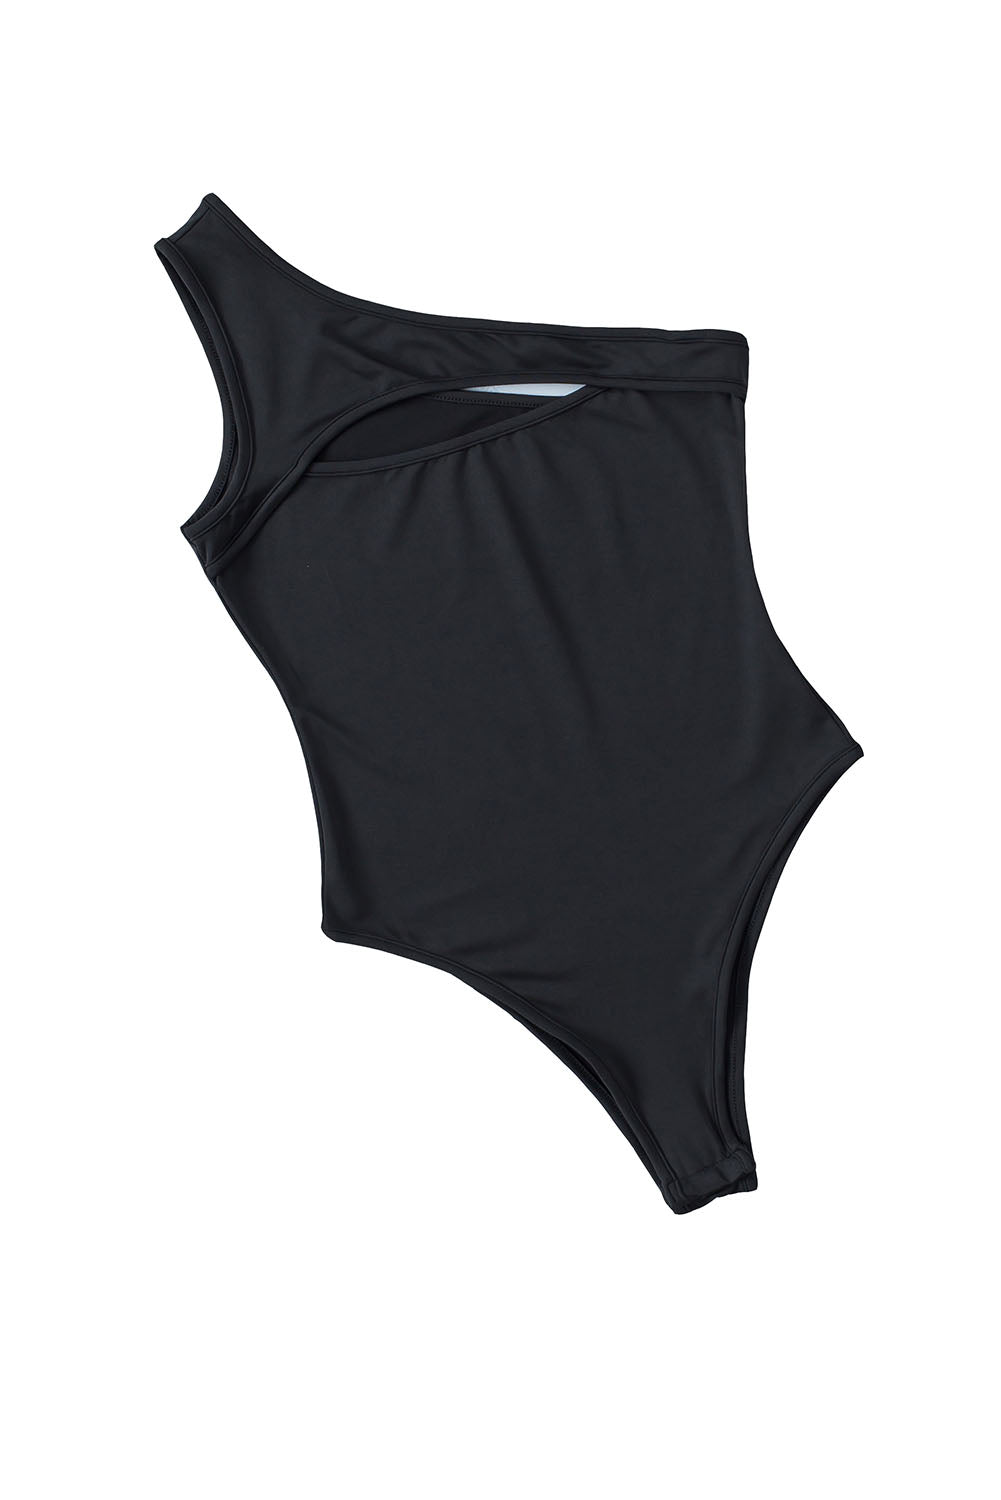 Black Peekaboo Cutout One Shoulder Bodysuit